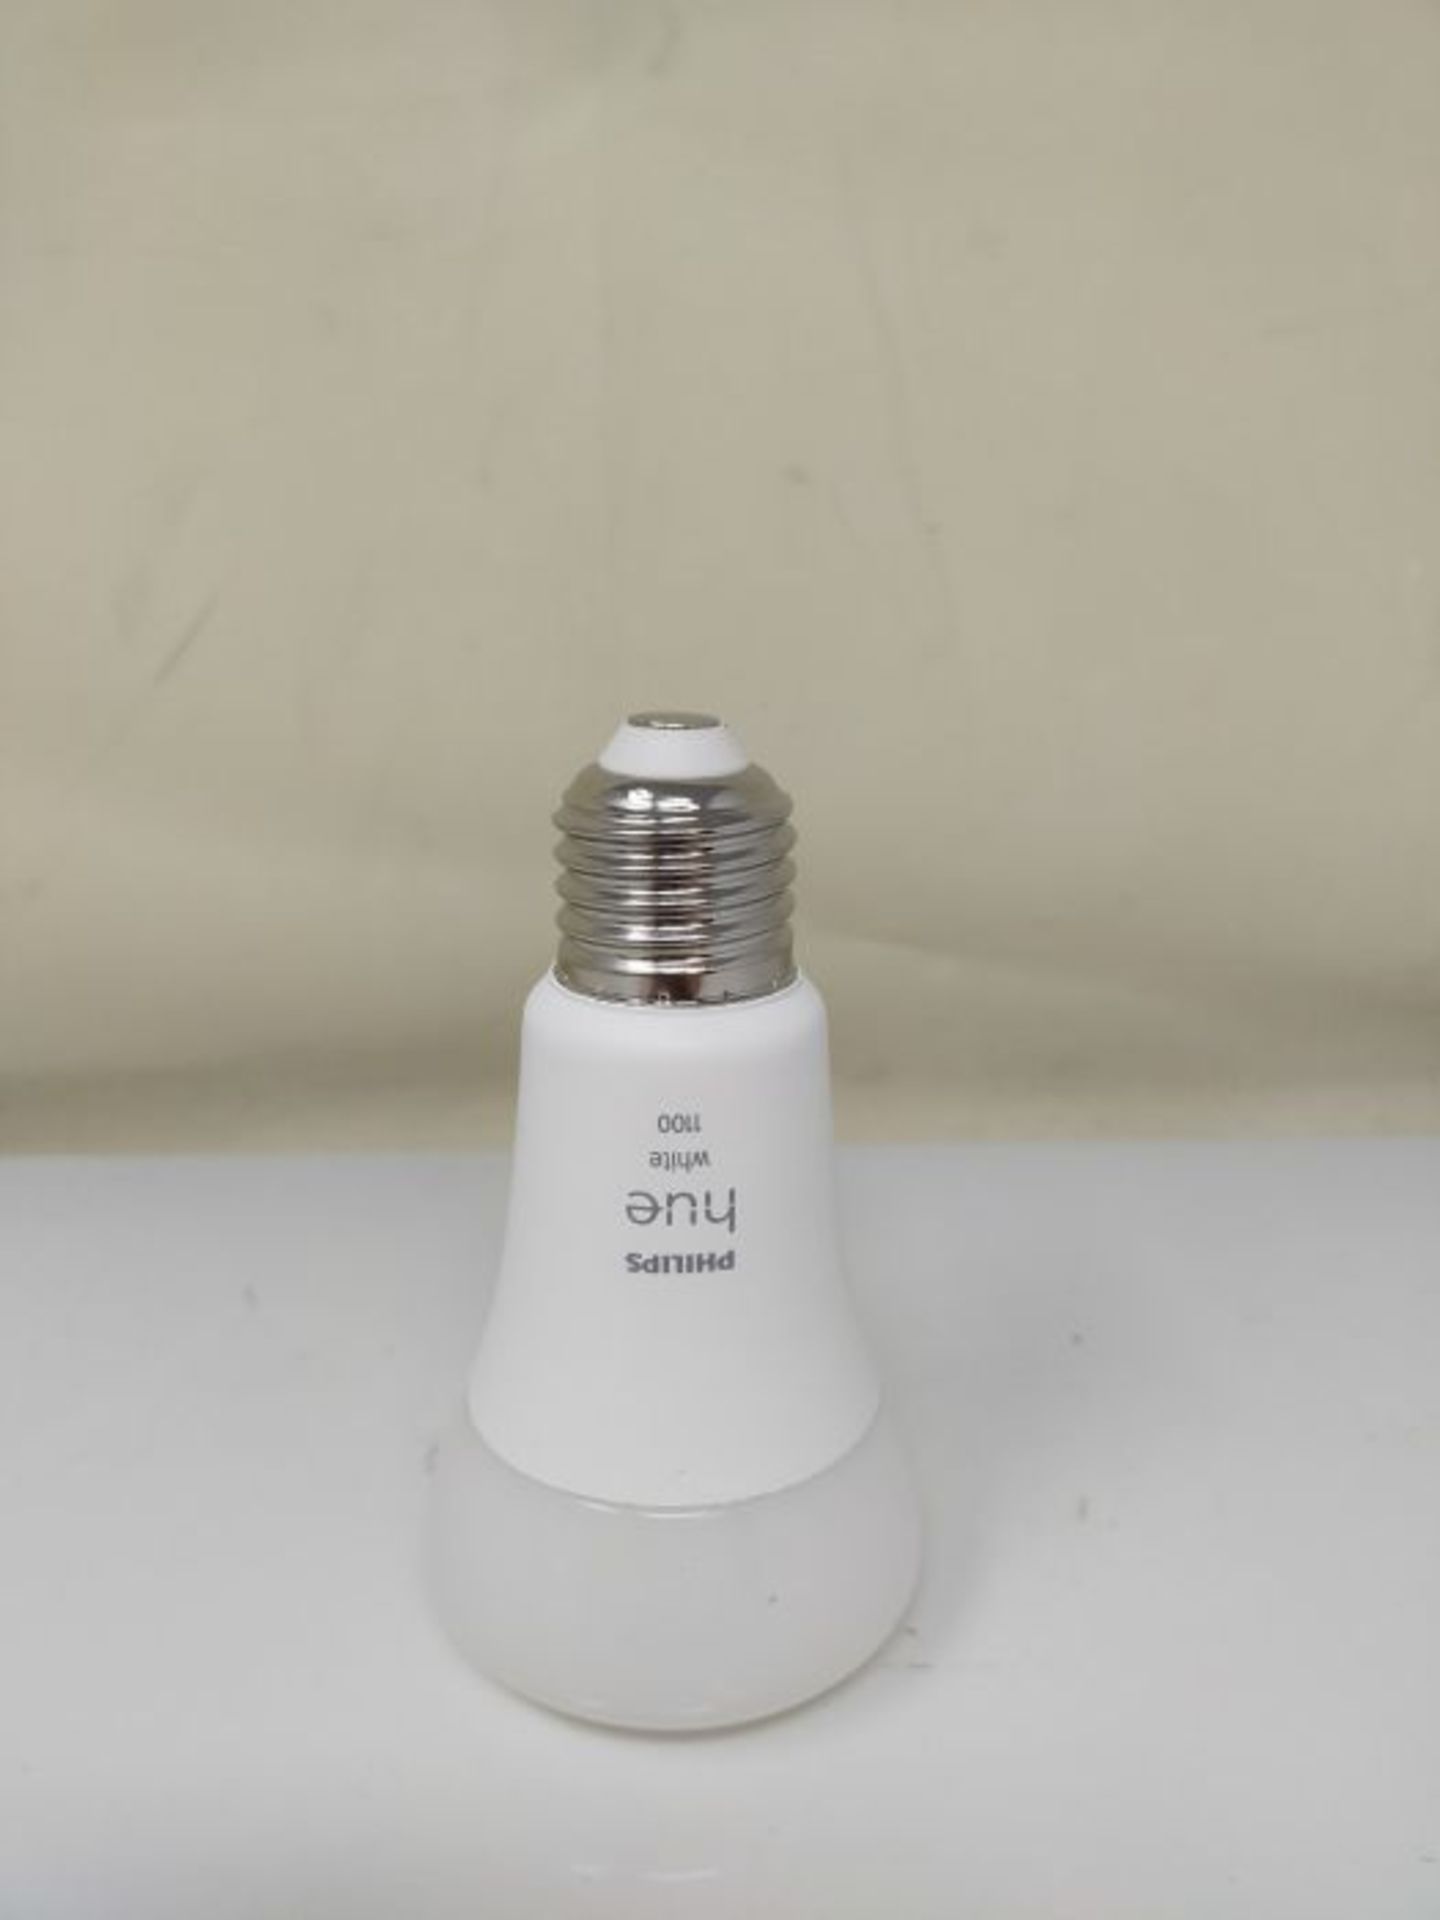 Philips Hue NEW White Smart Light Bulb 75W - 1100 Lumen [E27 Edison Screw] With Blueto - Image 3 of 3